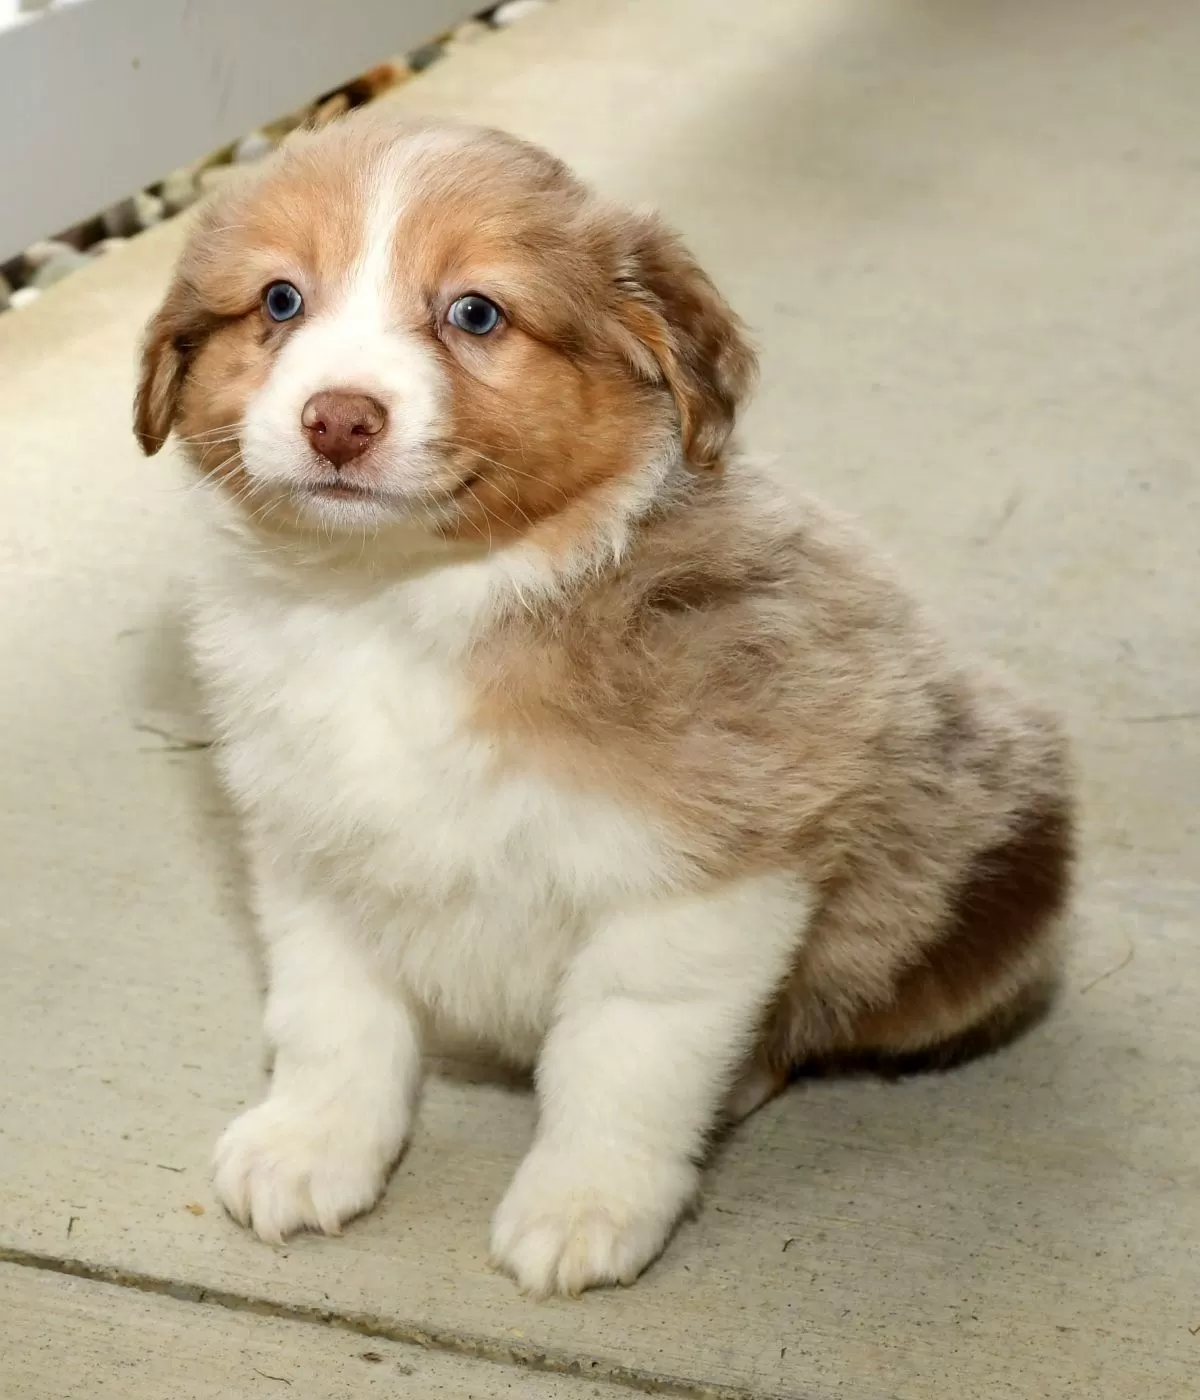 Puppy Name: Frankie